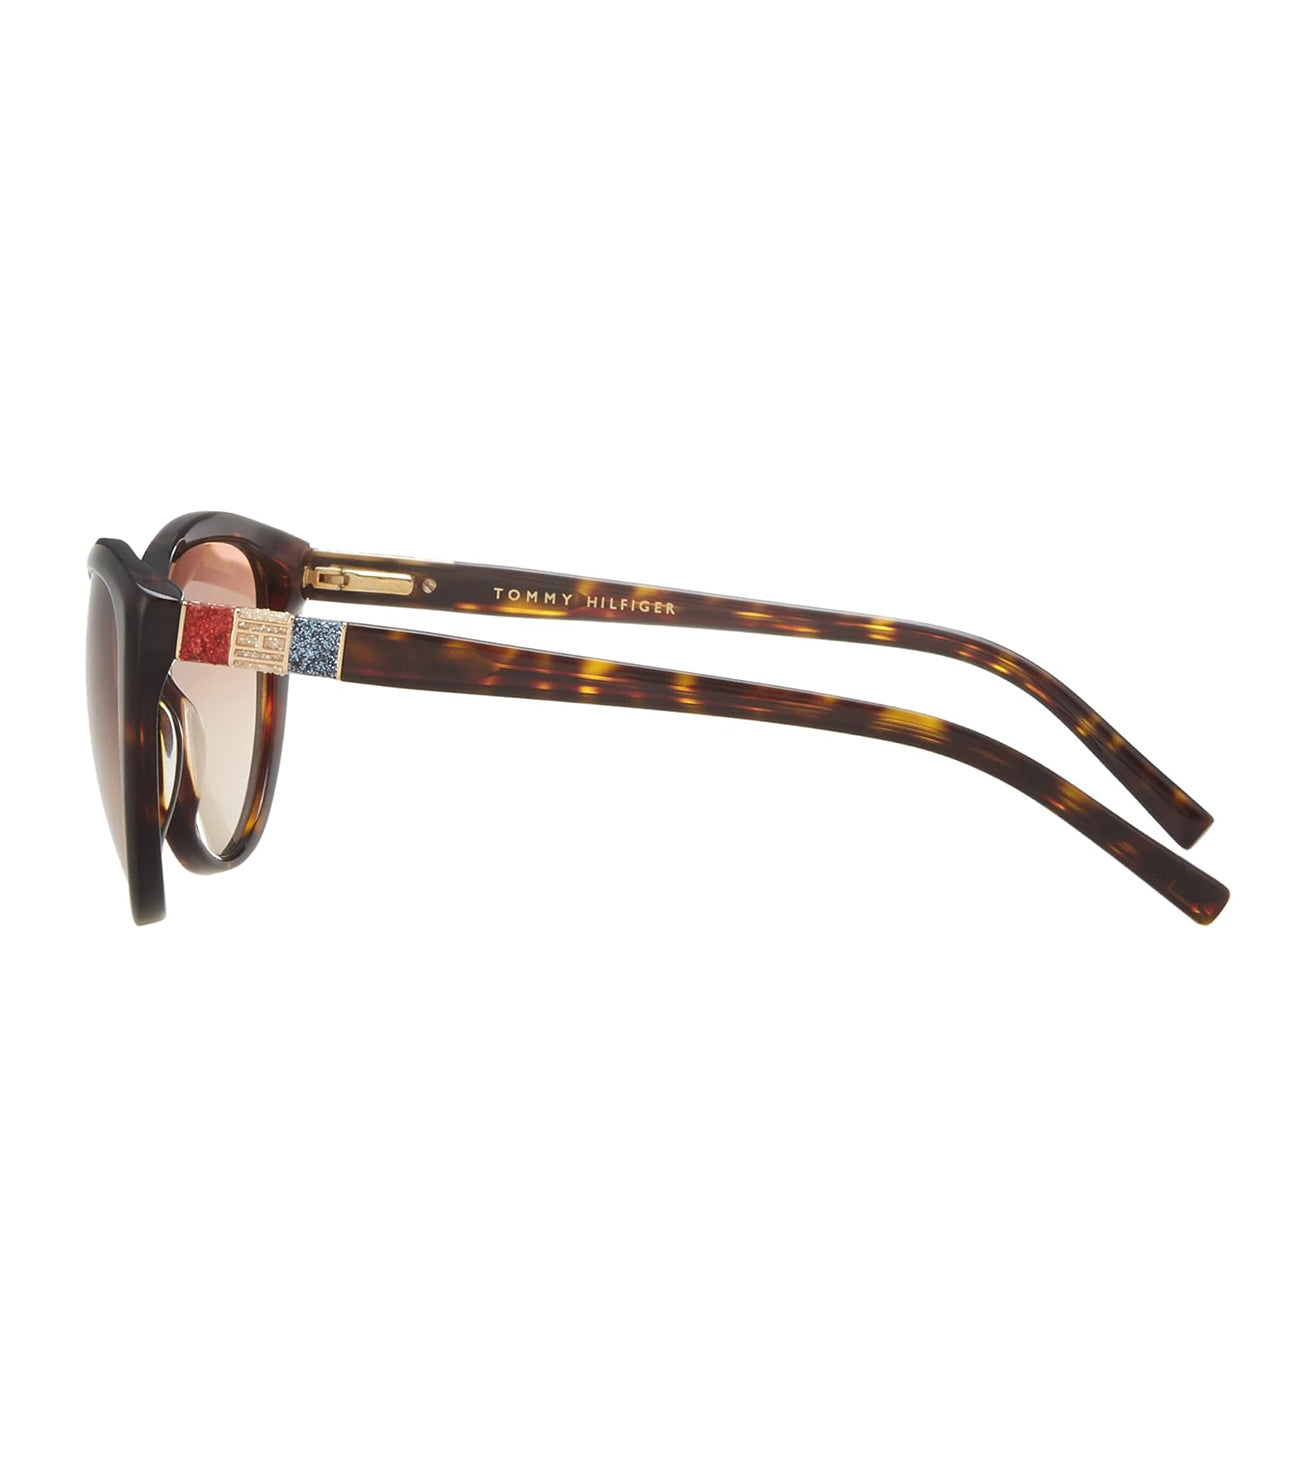 Tommy Hilfiger Women's Brown Cat-eye Sunglasses